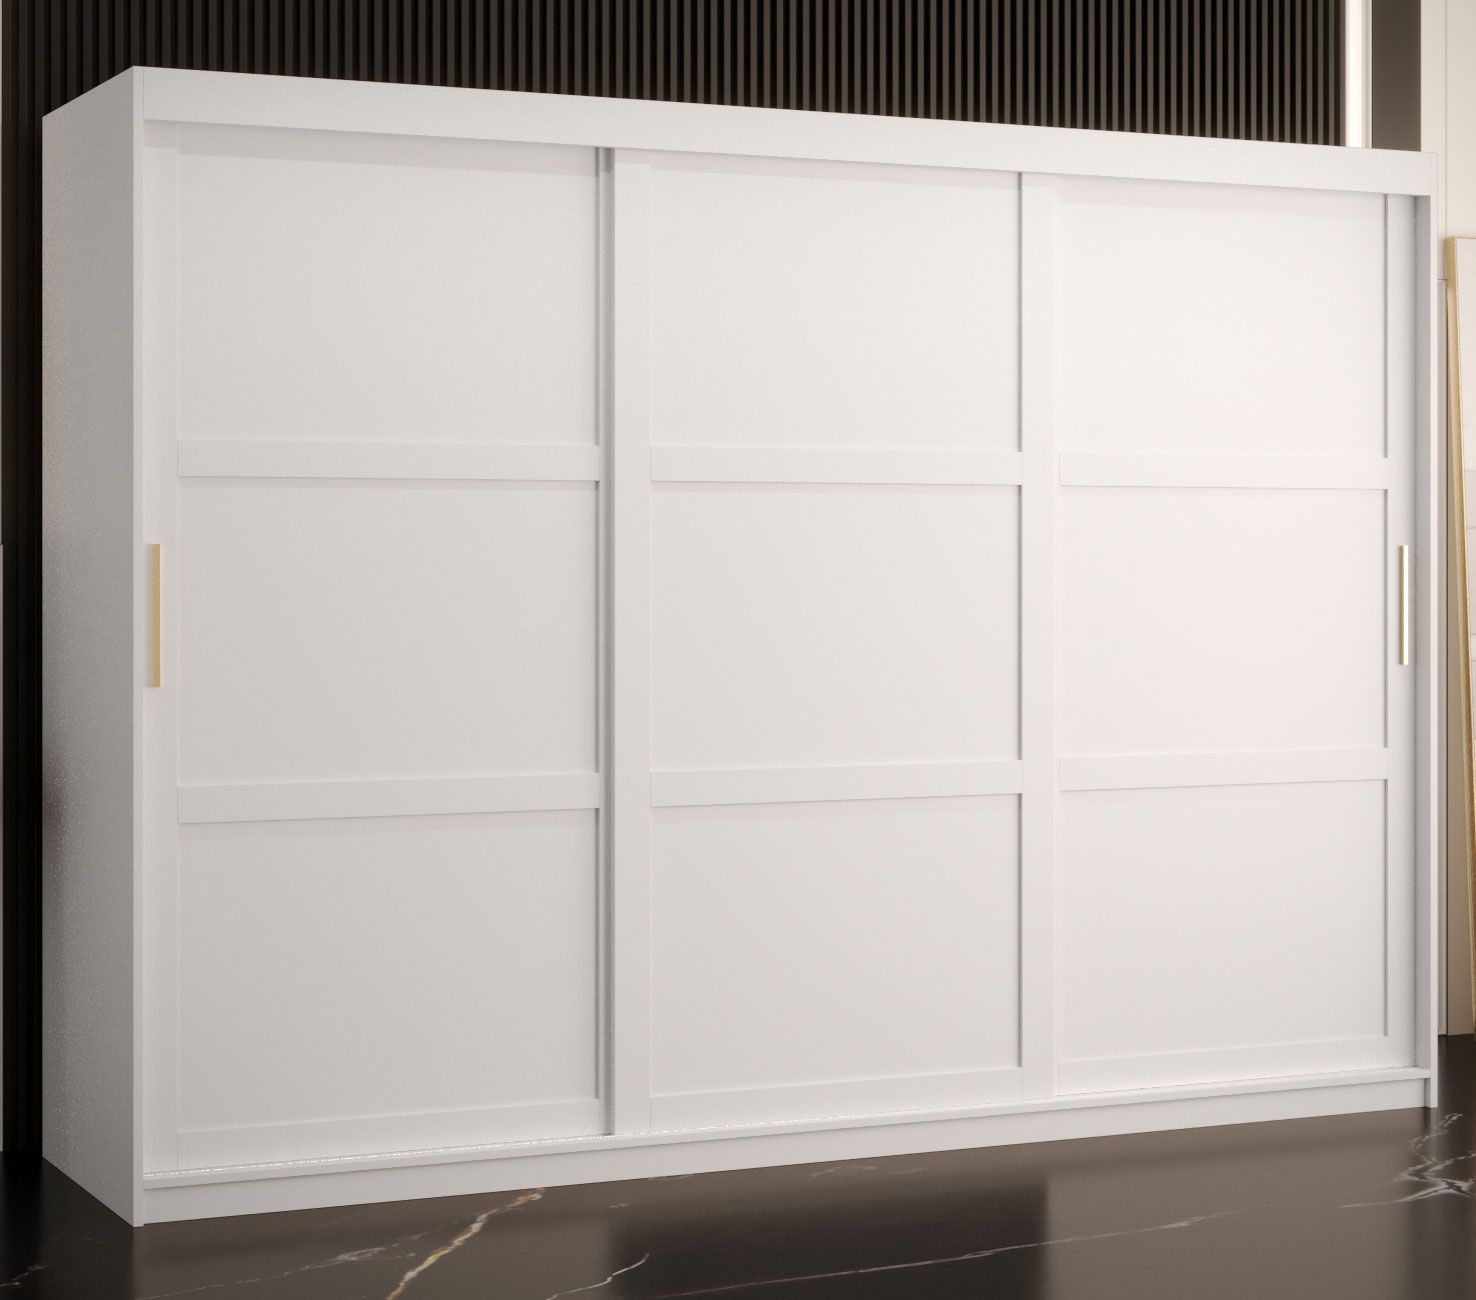 elegante kledingkast met drie deuren Liskamm 21, kleur: mat wit - afmetingen: 200 x 250 x 62 cm (H x B x D), met 10 vakken en twee kledingroedes